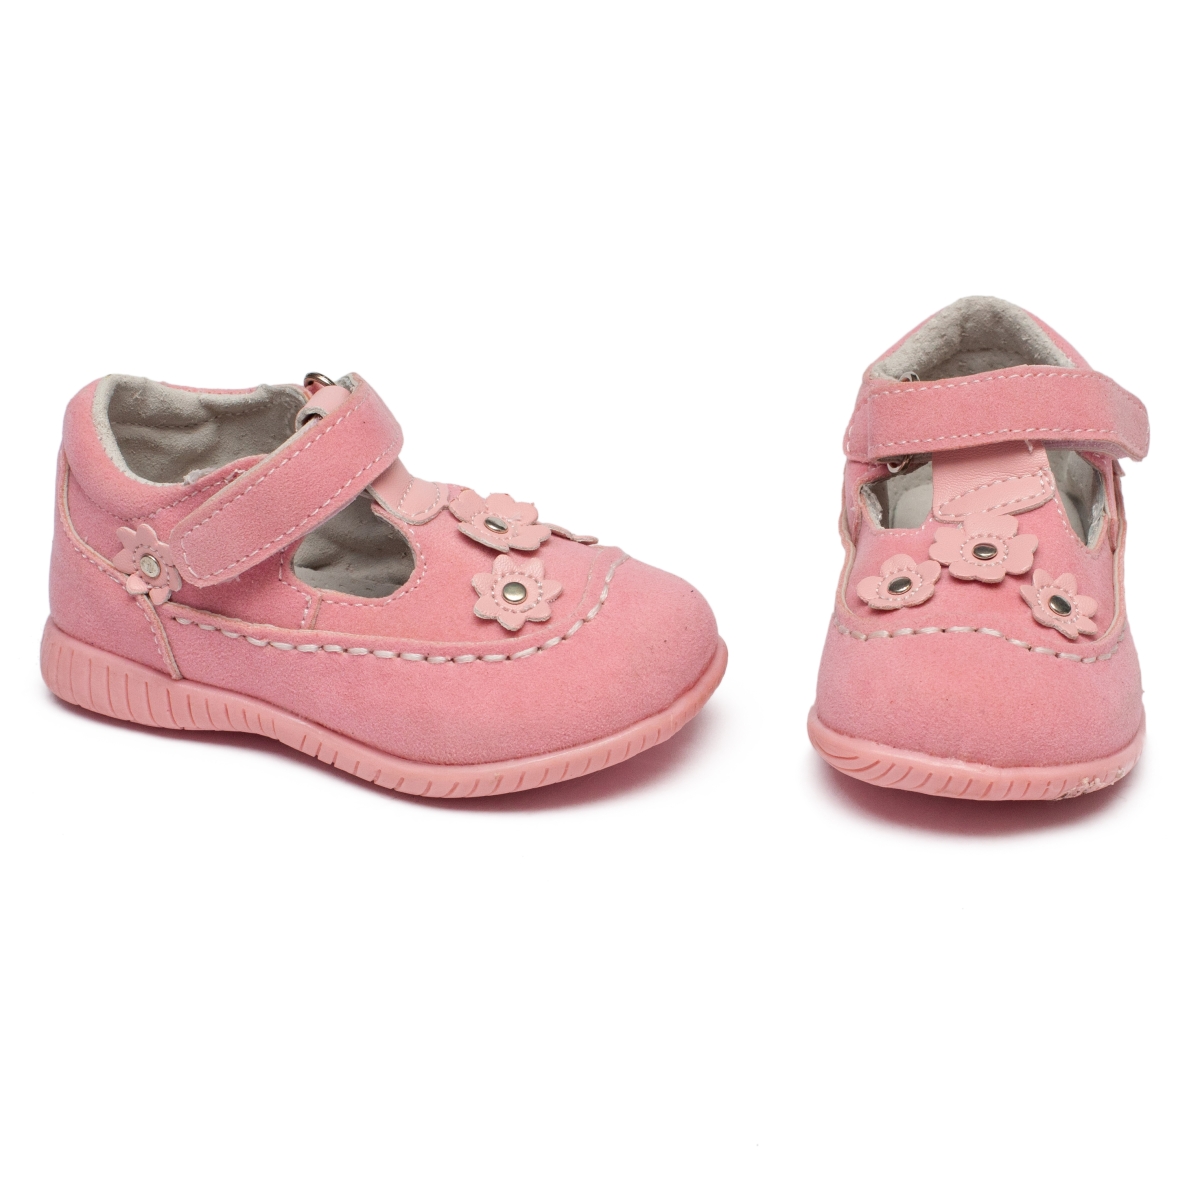 powder Constitution Privilege Pantofi fete flexibili 1600 roz 19-24. Incaltaminte din piele pentru copii  si adulti - bambinii.ro